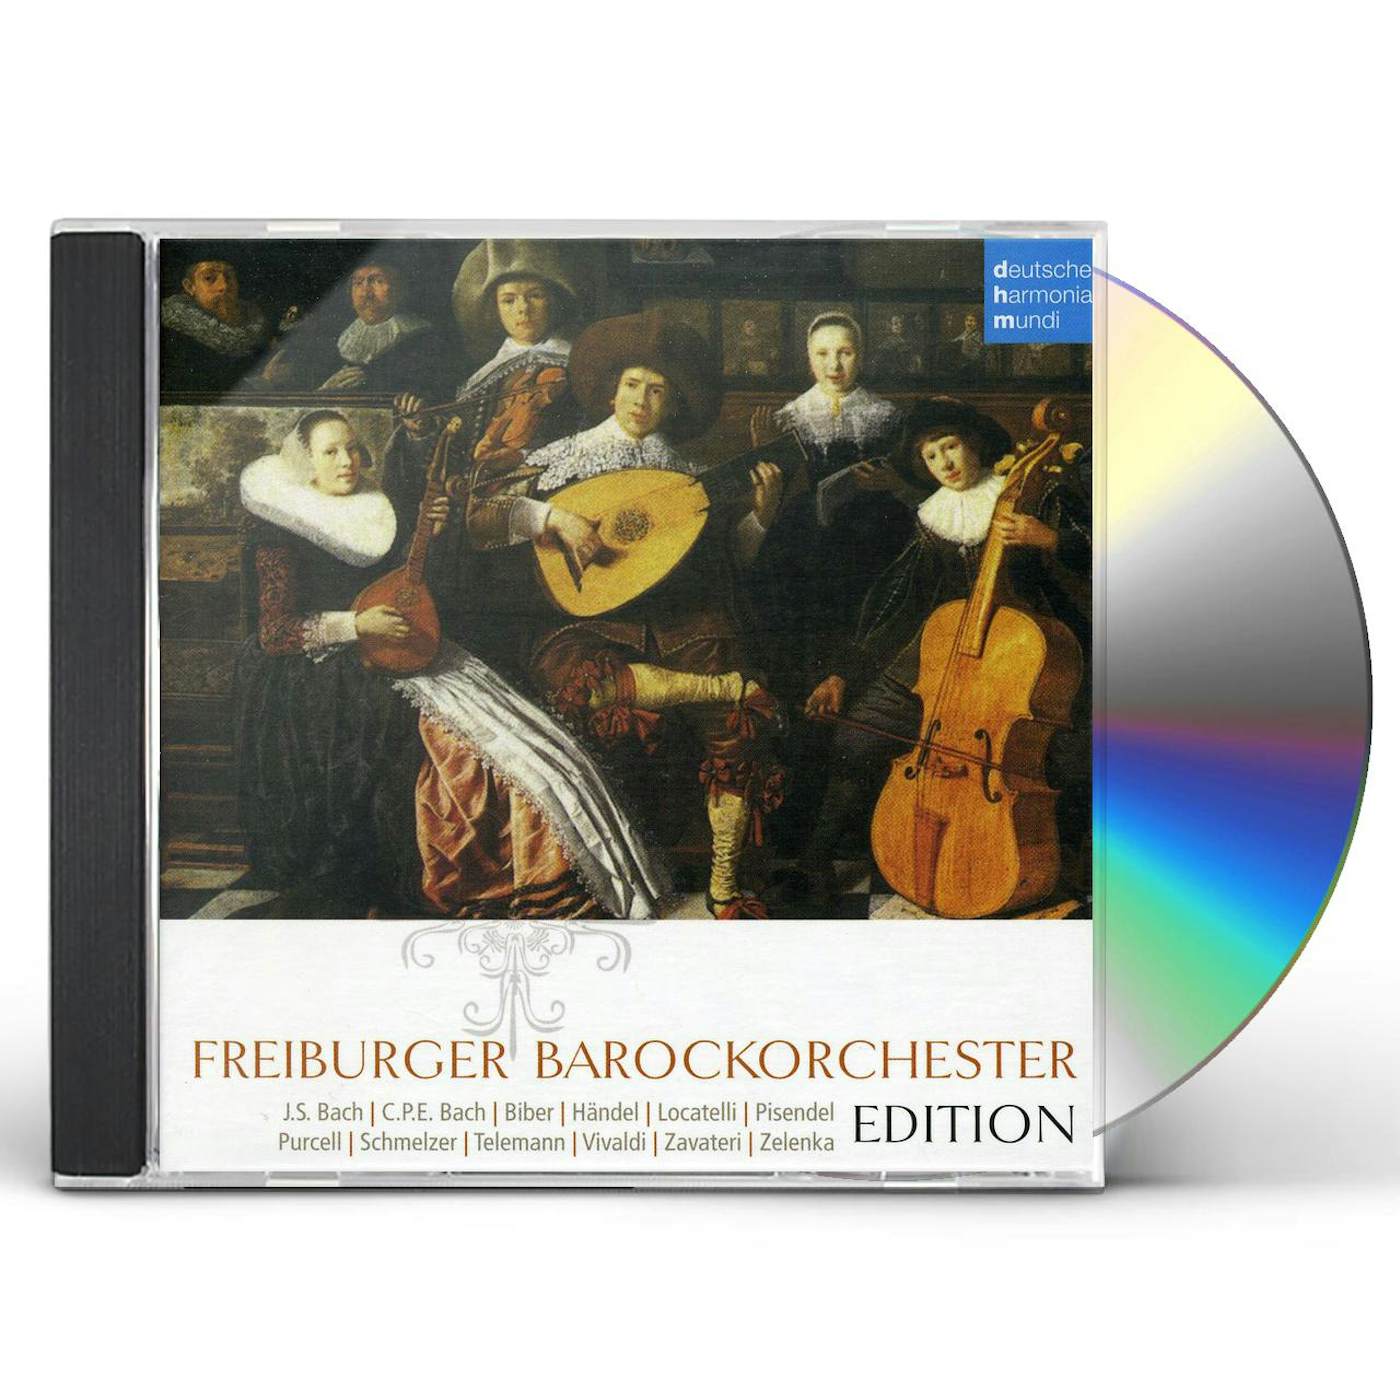 FREIBURGER BAROCKORCHESTER EDITION CD